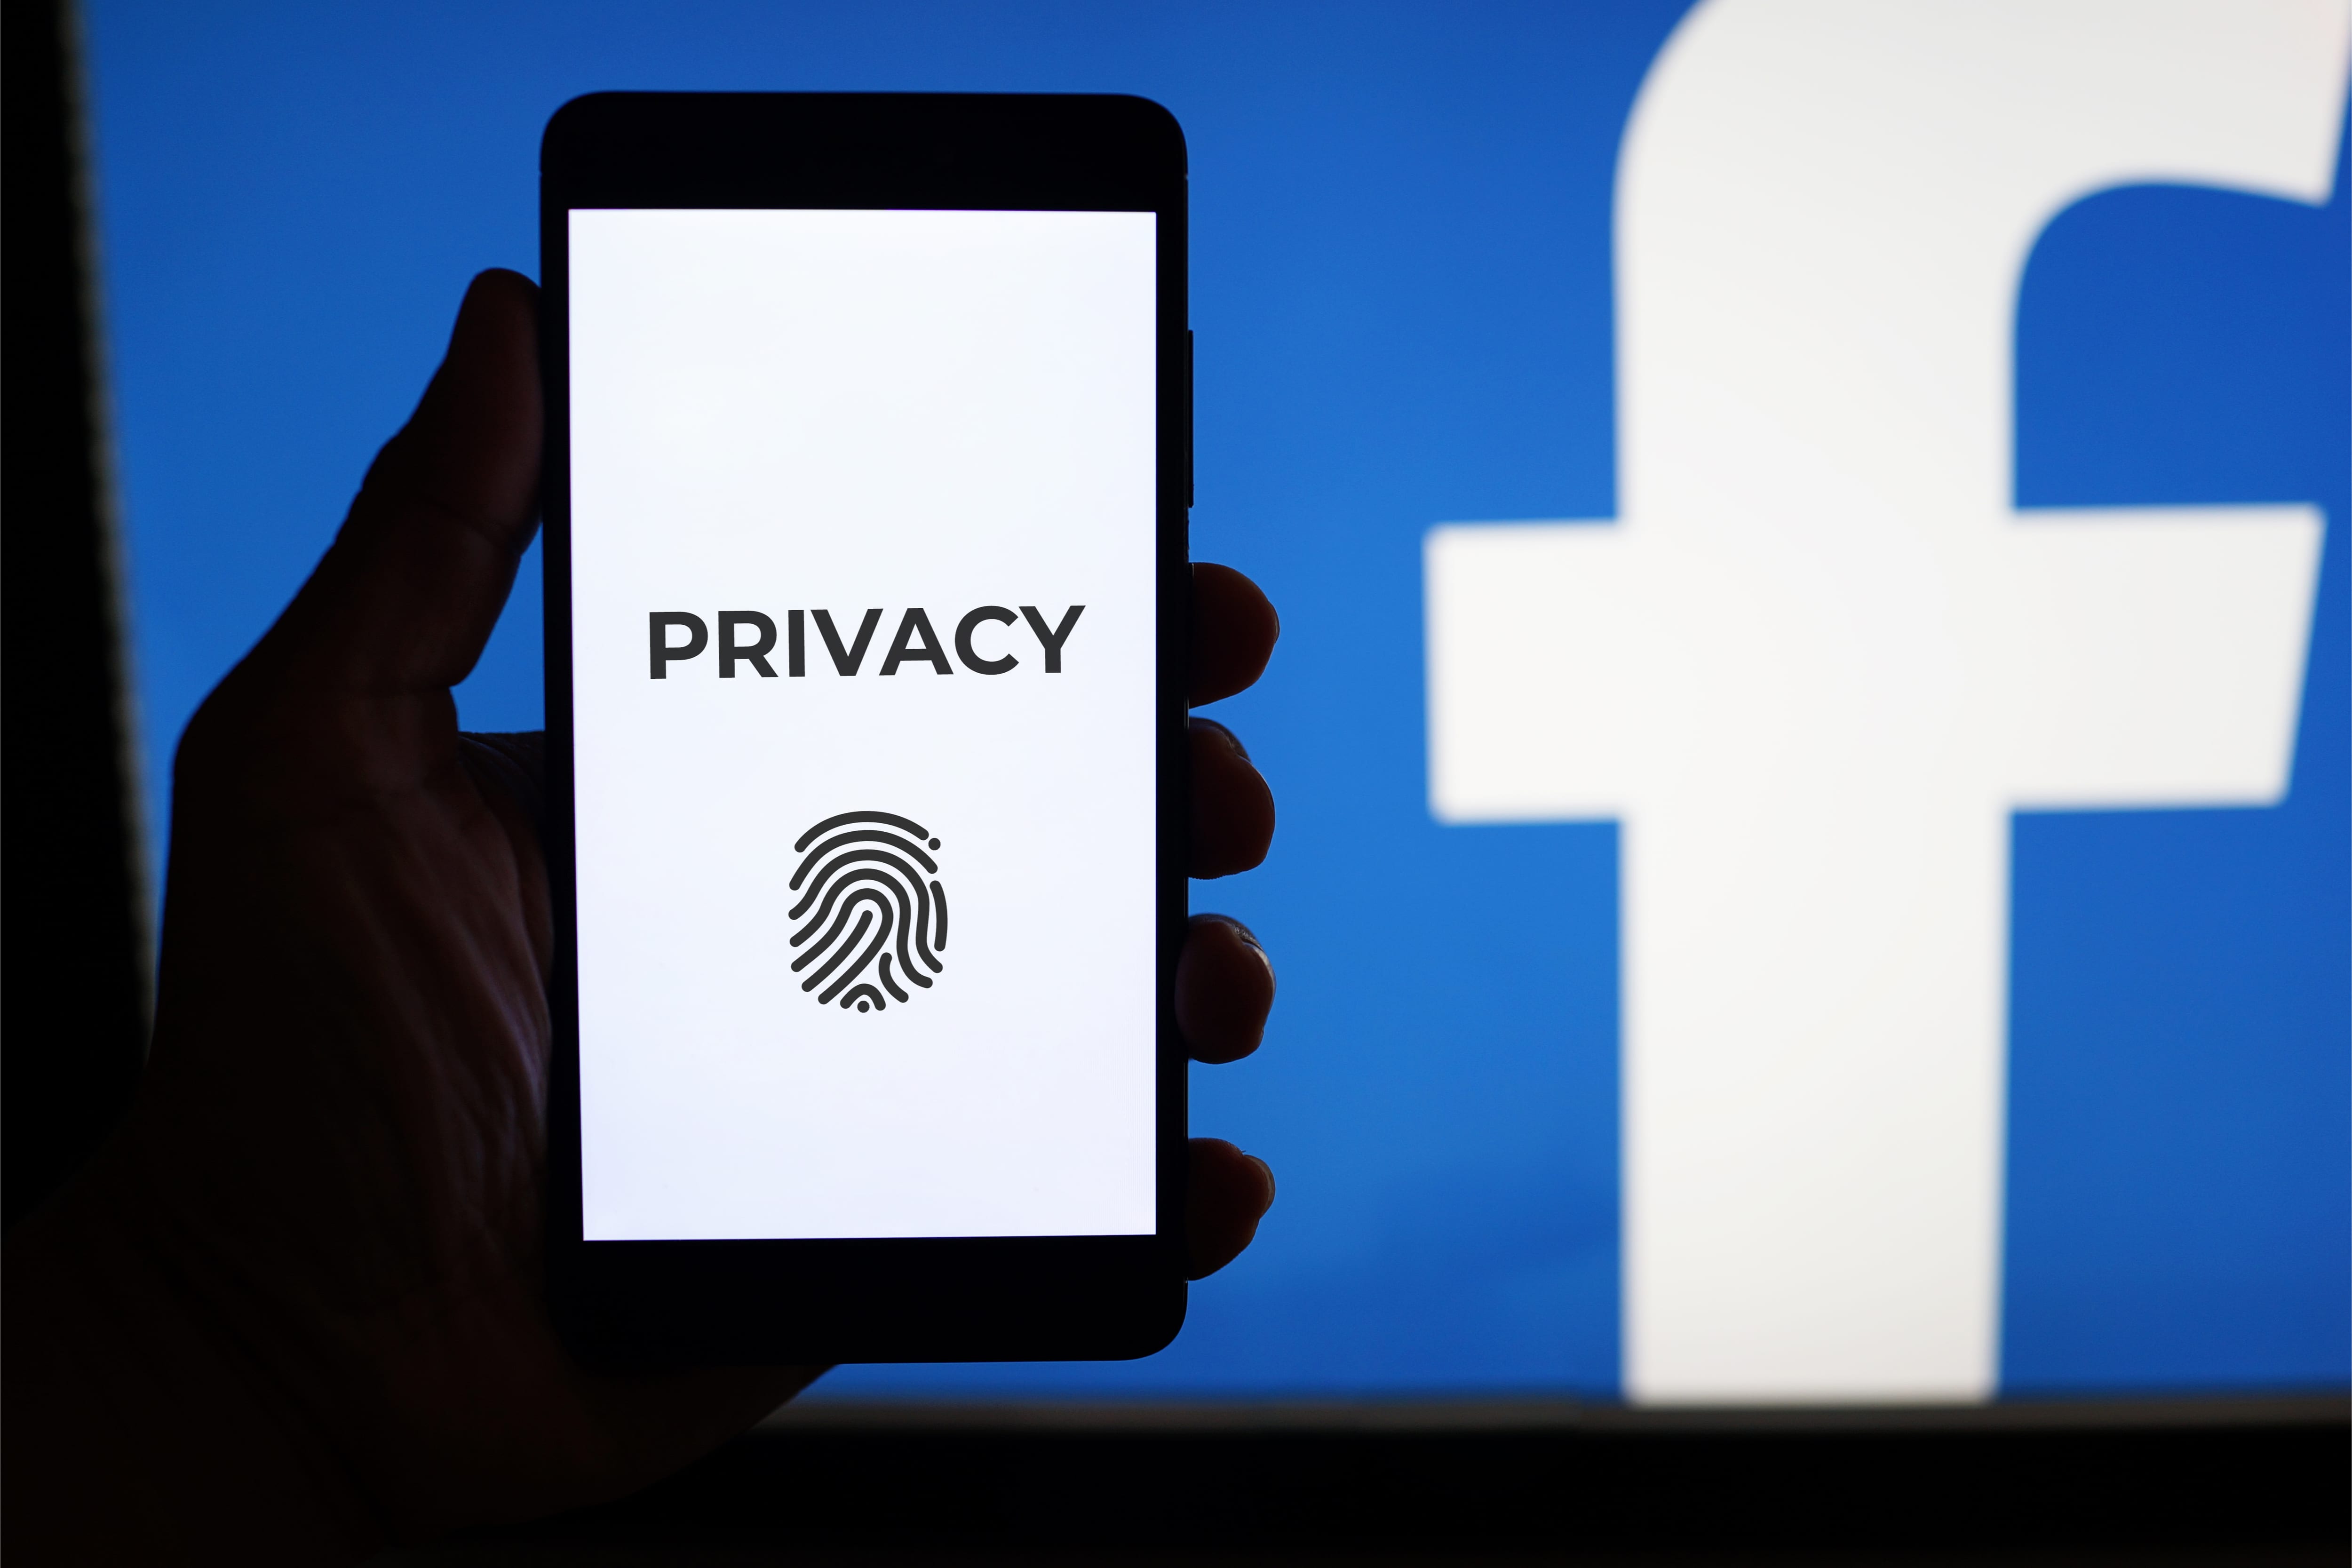 Court Denies Dismissal Motion in Facebook User Data Privacy Derivative Suit